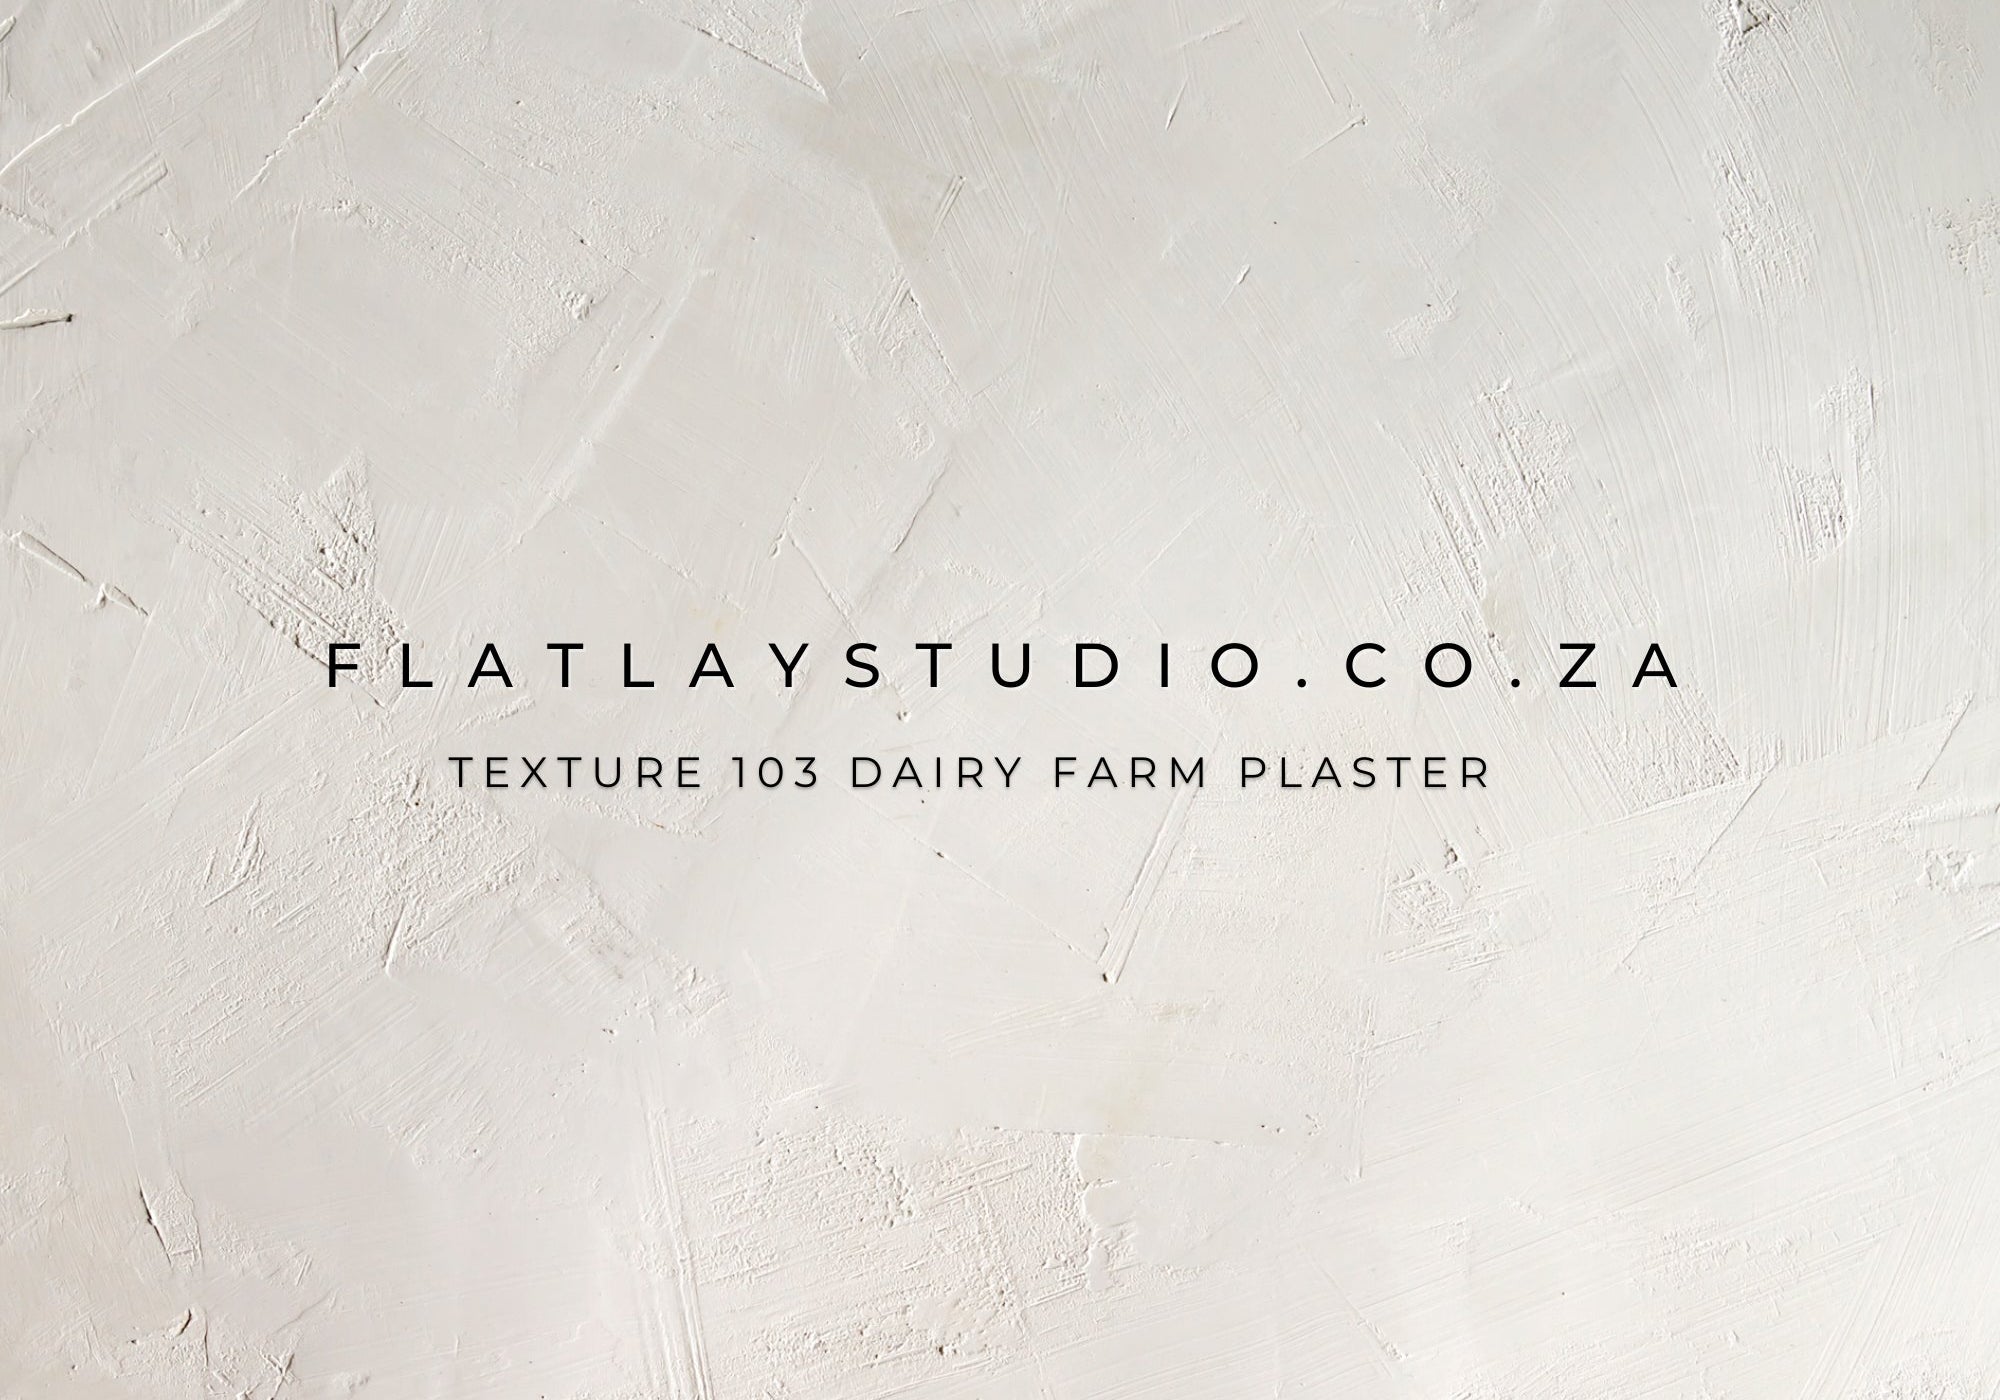 Texture 103 Dairy Farm Plaster - FlatlayStudio